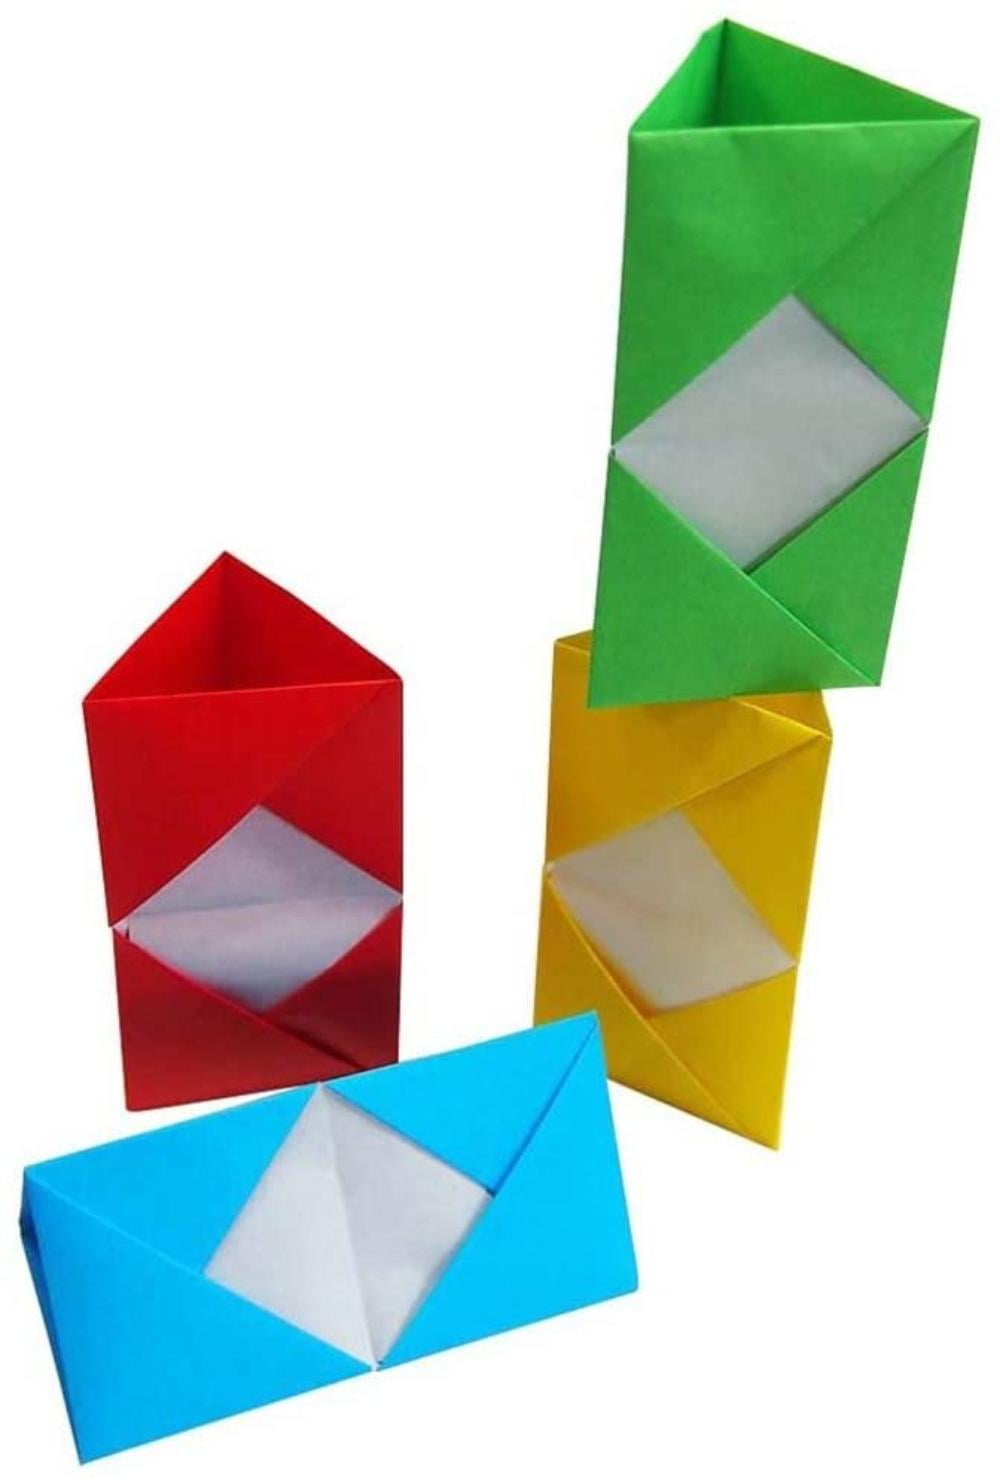 Japanese Origami Paper Kit - Sweets #9391 - Japan Bargain Inc